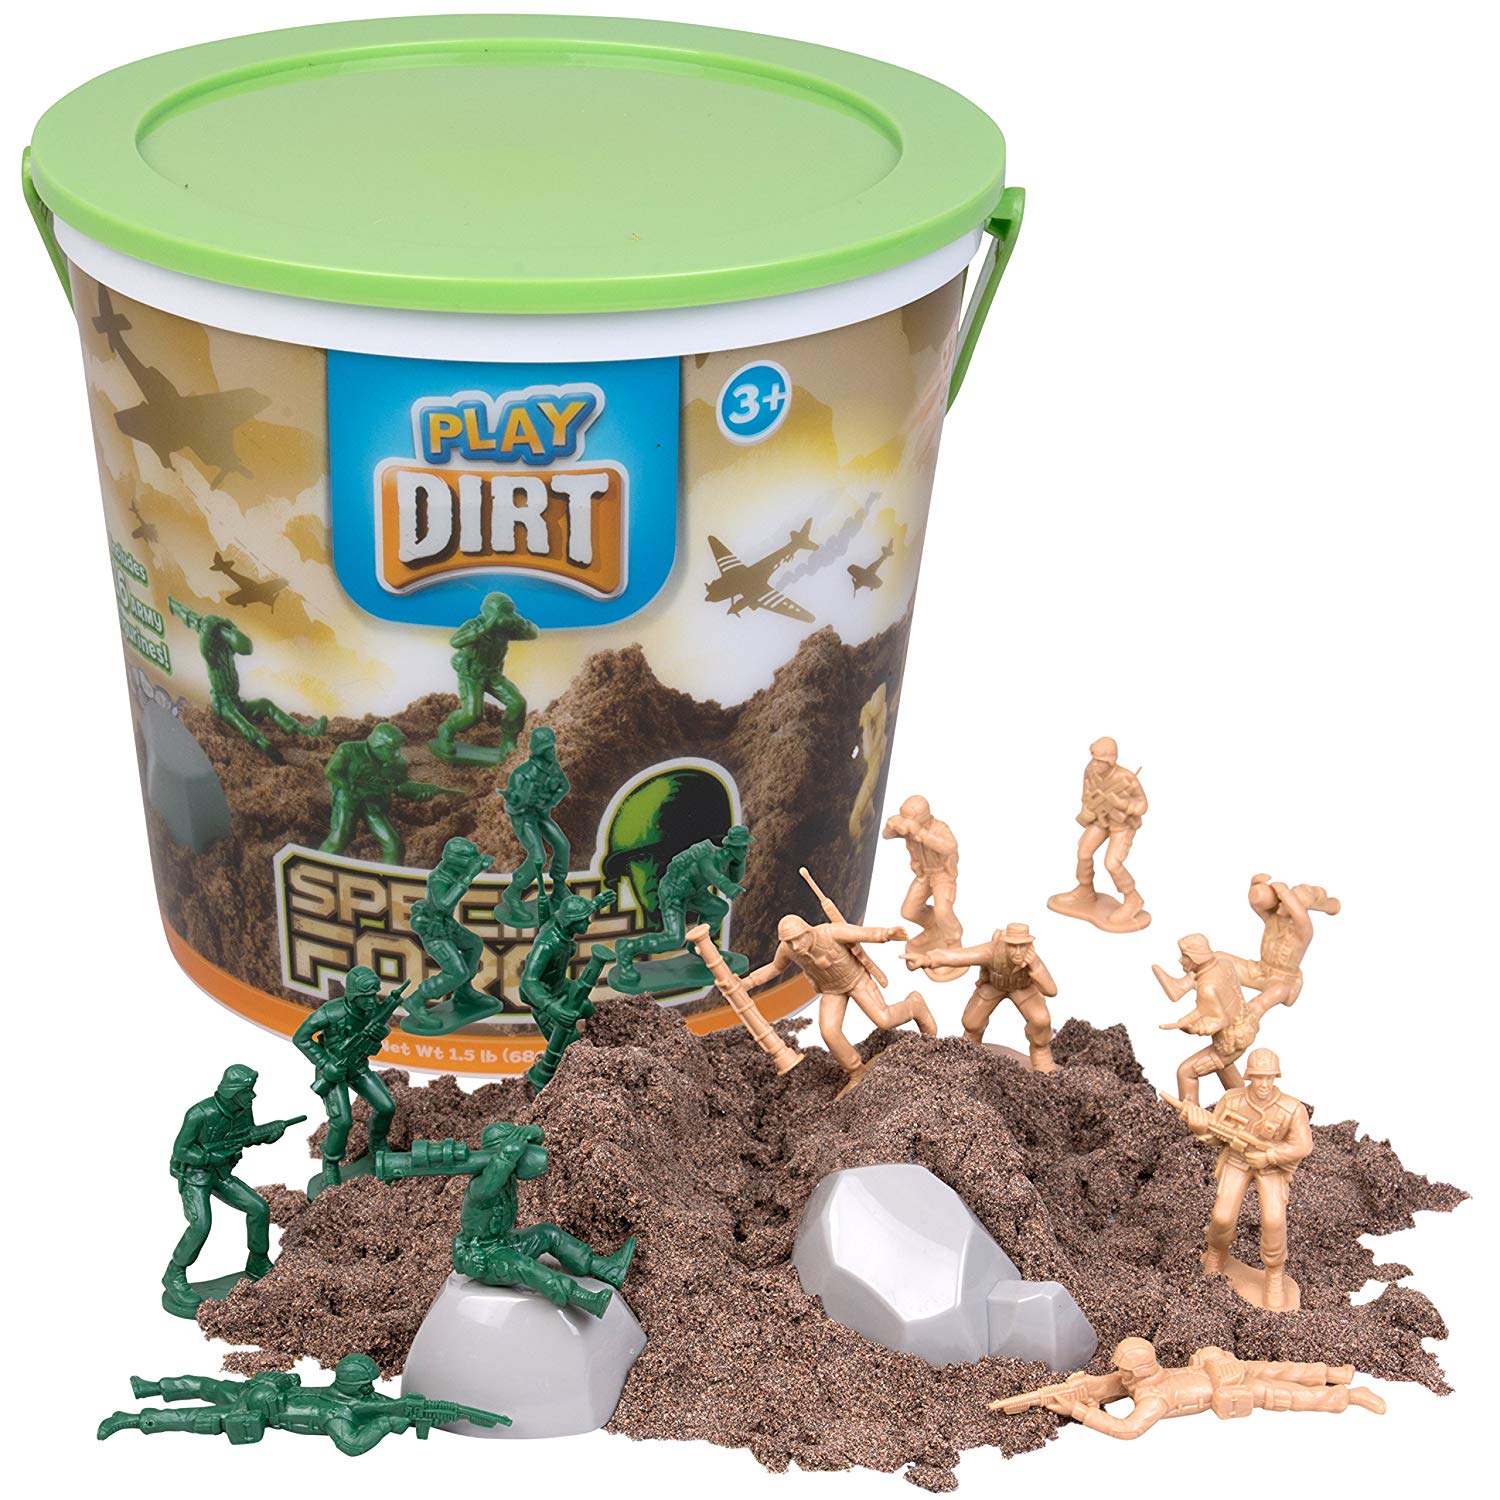 Play Dirt Bucket 3 Pounds